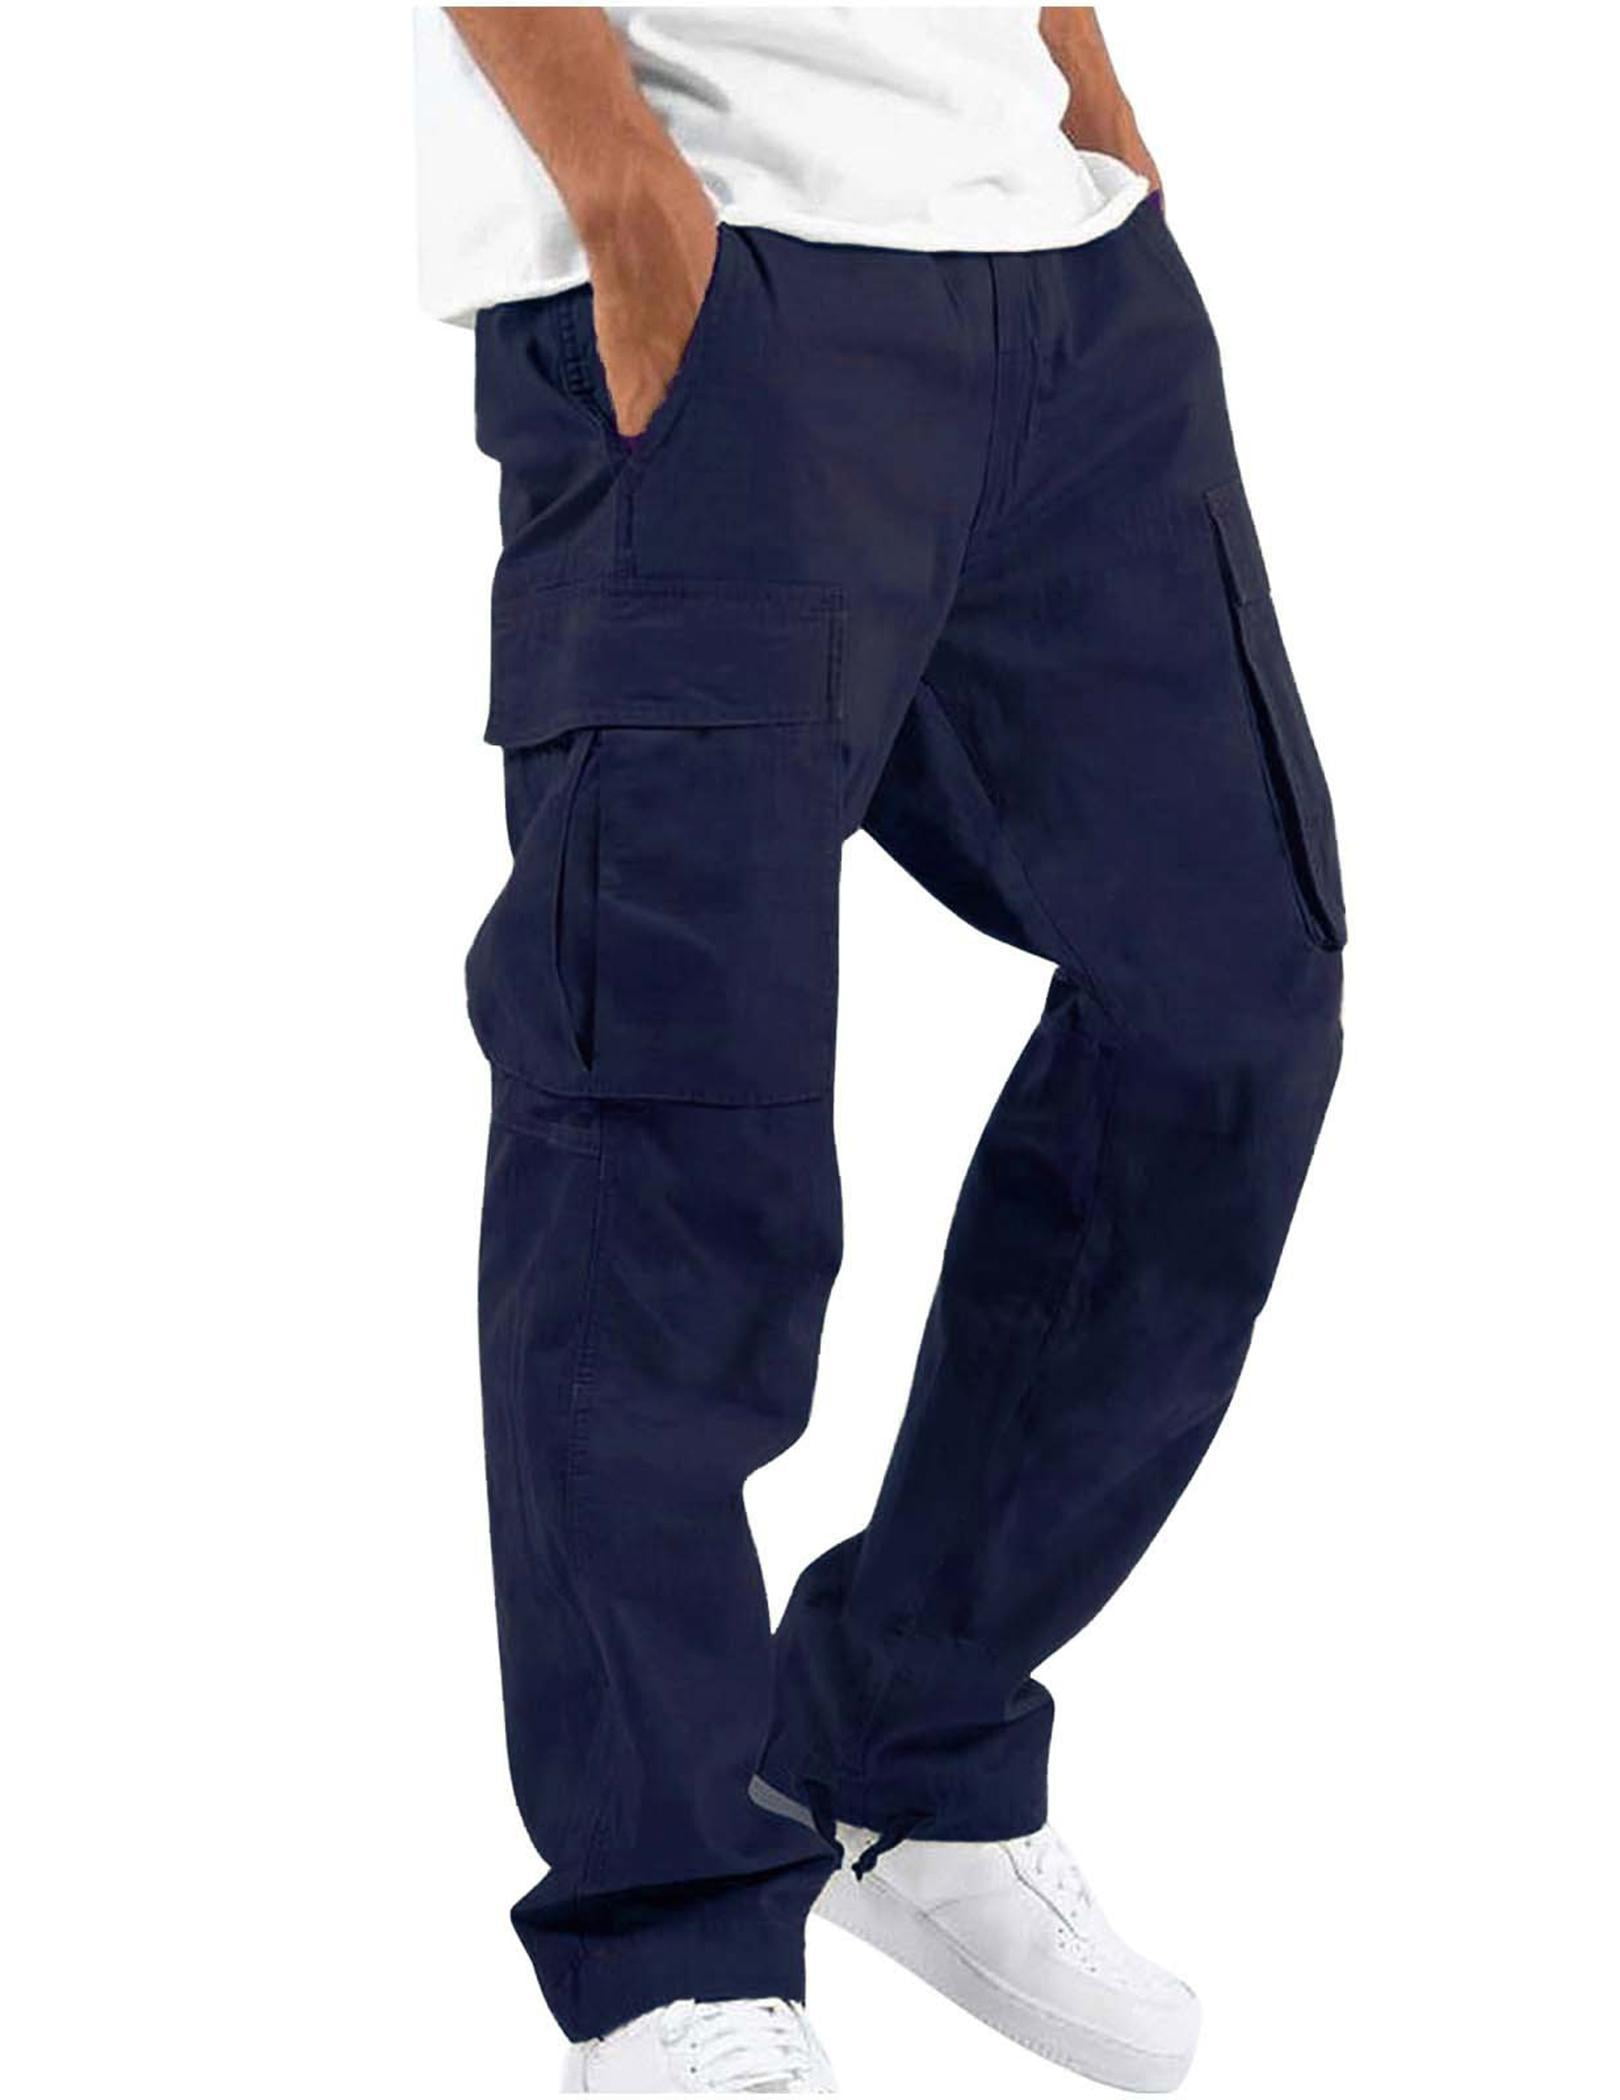 Deyeek Men's Casual Cargo Pants Hiking Pants Workout Joggers Sweatpants ...